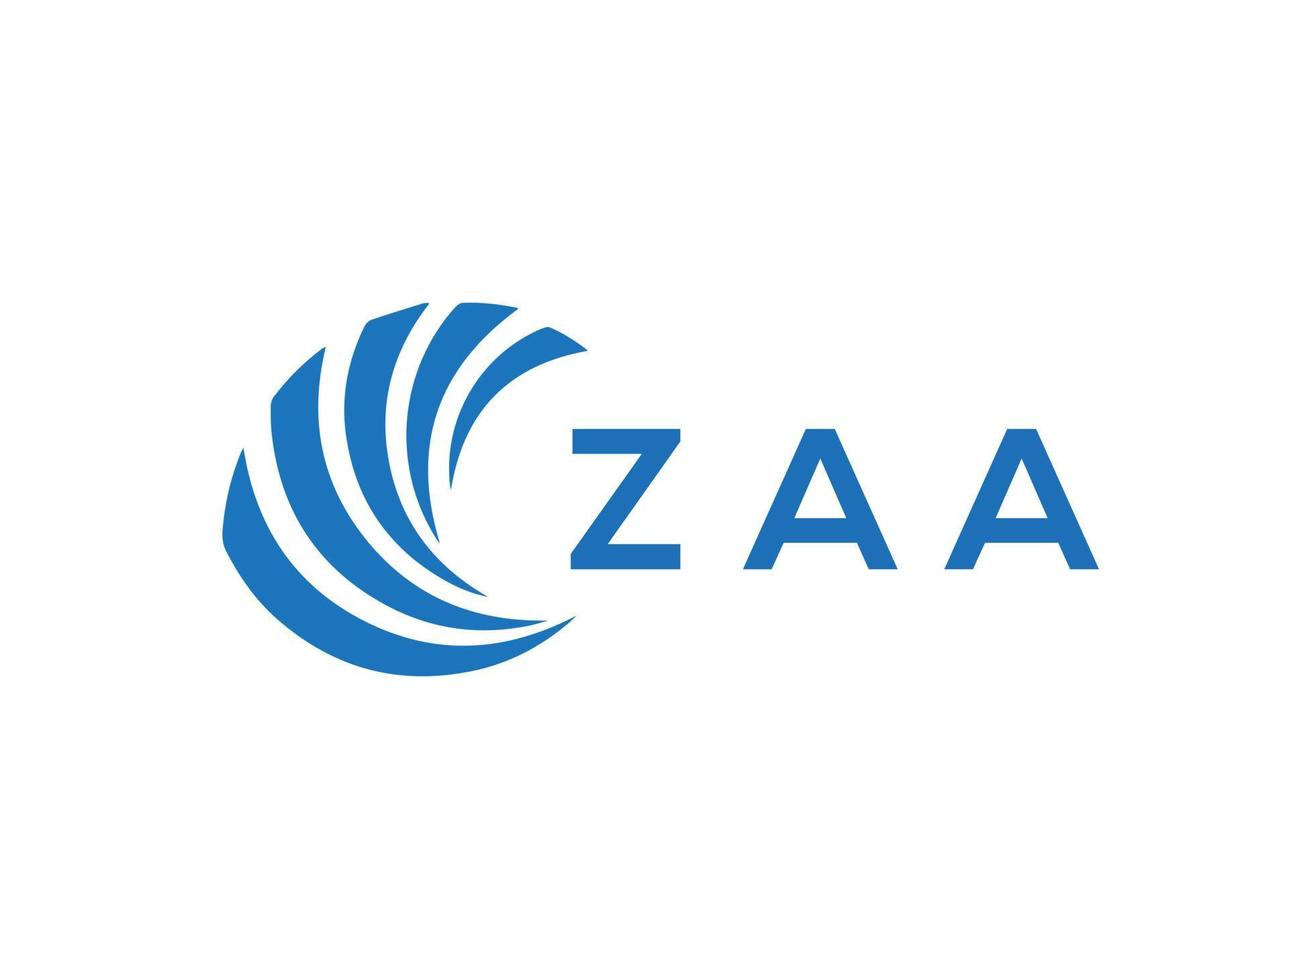 zaa brev logotyp design på vit bakgrund. zaa kreativ cirkel brev logotyp begrepp. zaa brev design. vektor